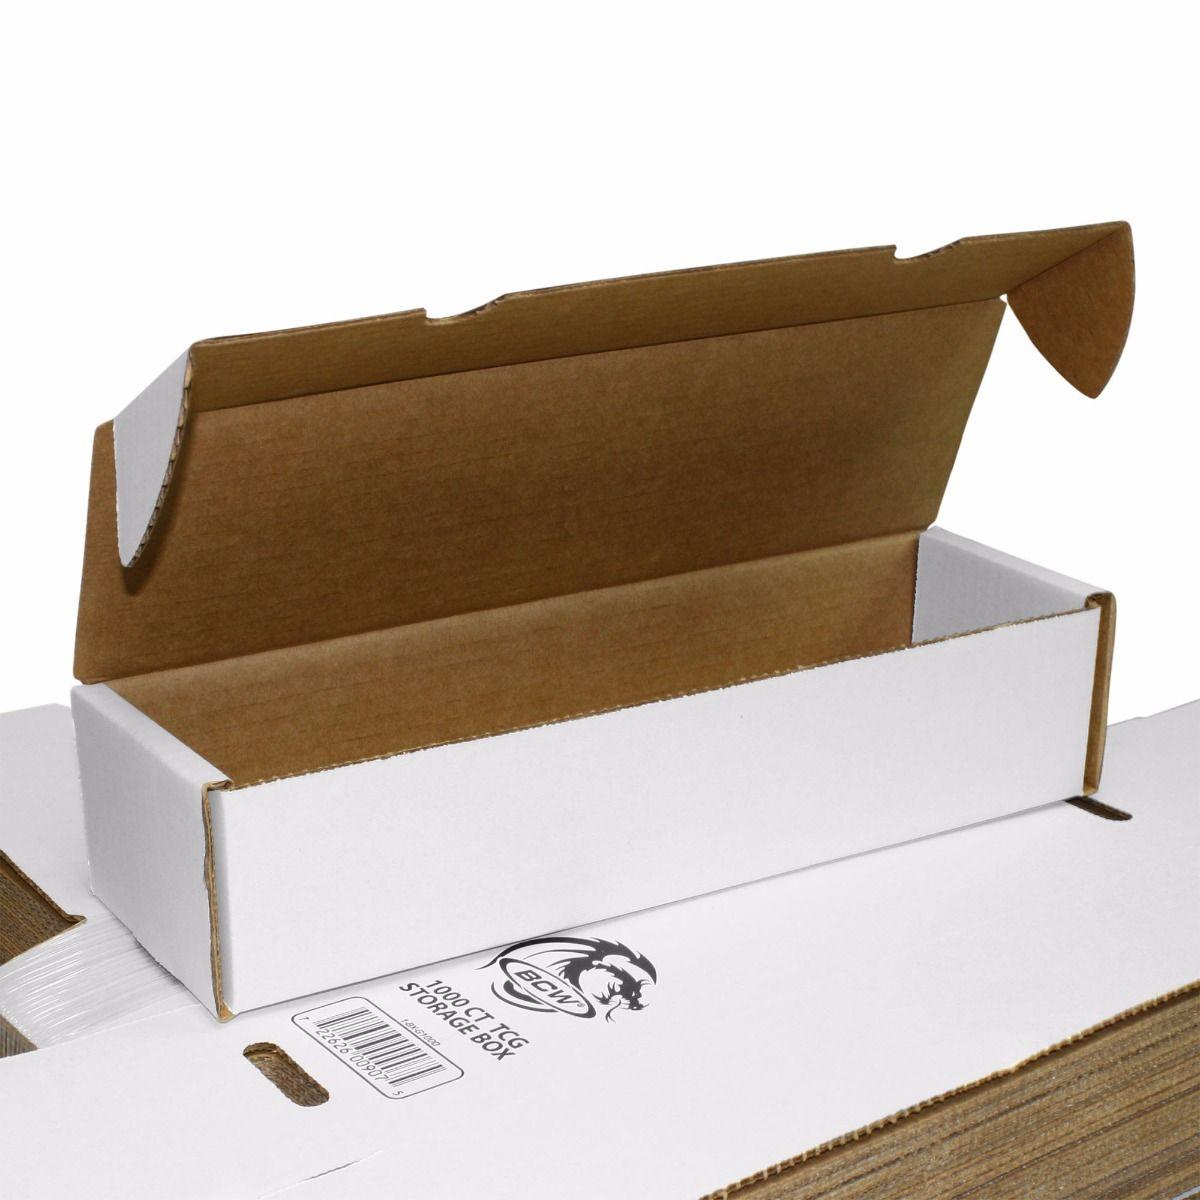 Cardboard Newspaper storage Box, for Tool Rack at Best Price in